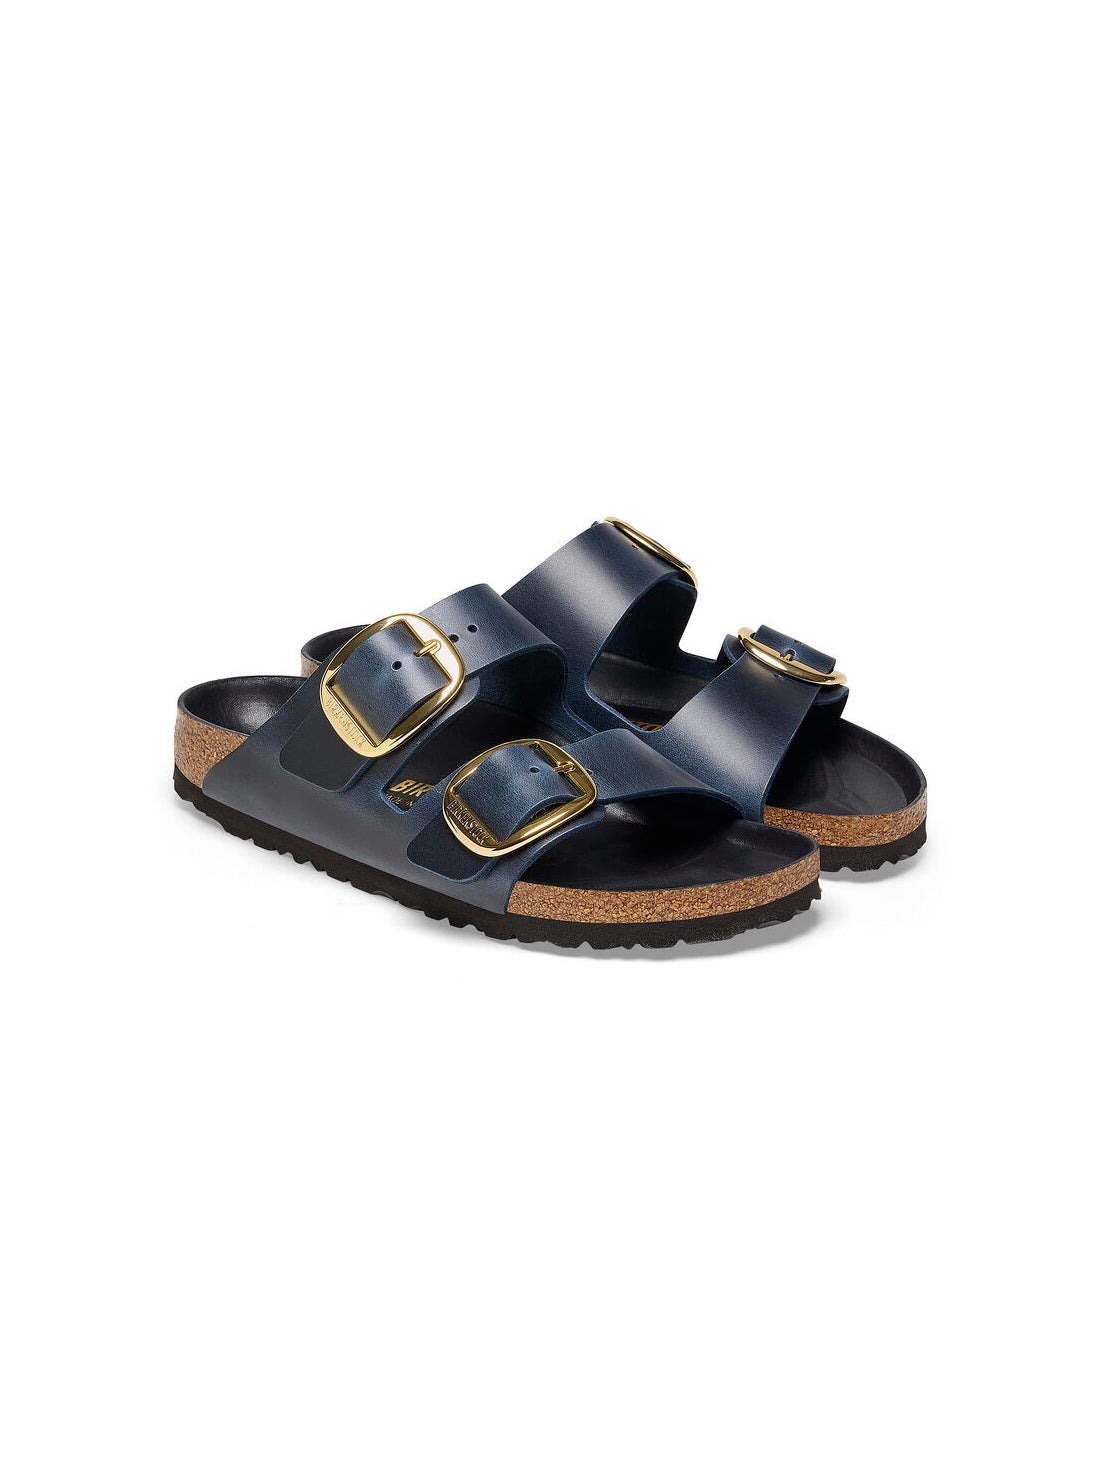 birkenstock arizona big buckle sandals in oiled leather blue narrow